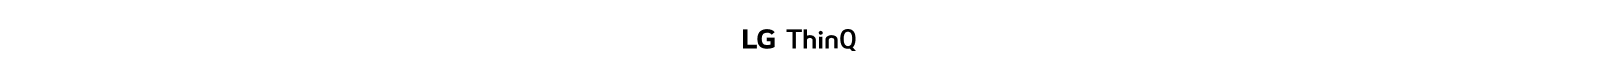 Logo de LG ThinQ